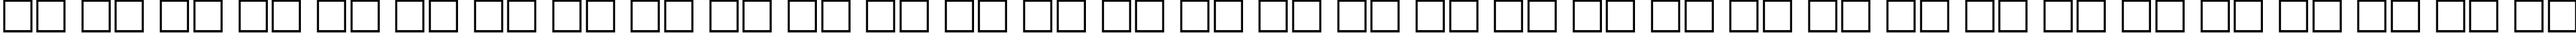 Пример написания русского алфавита шрифтом Romic